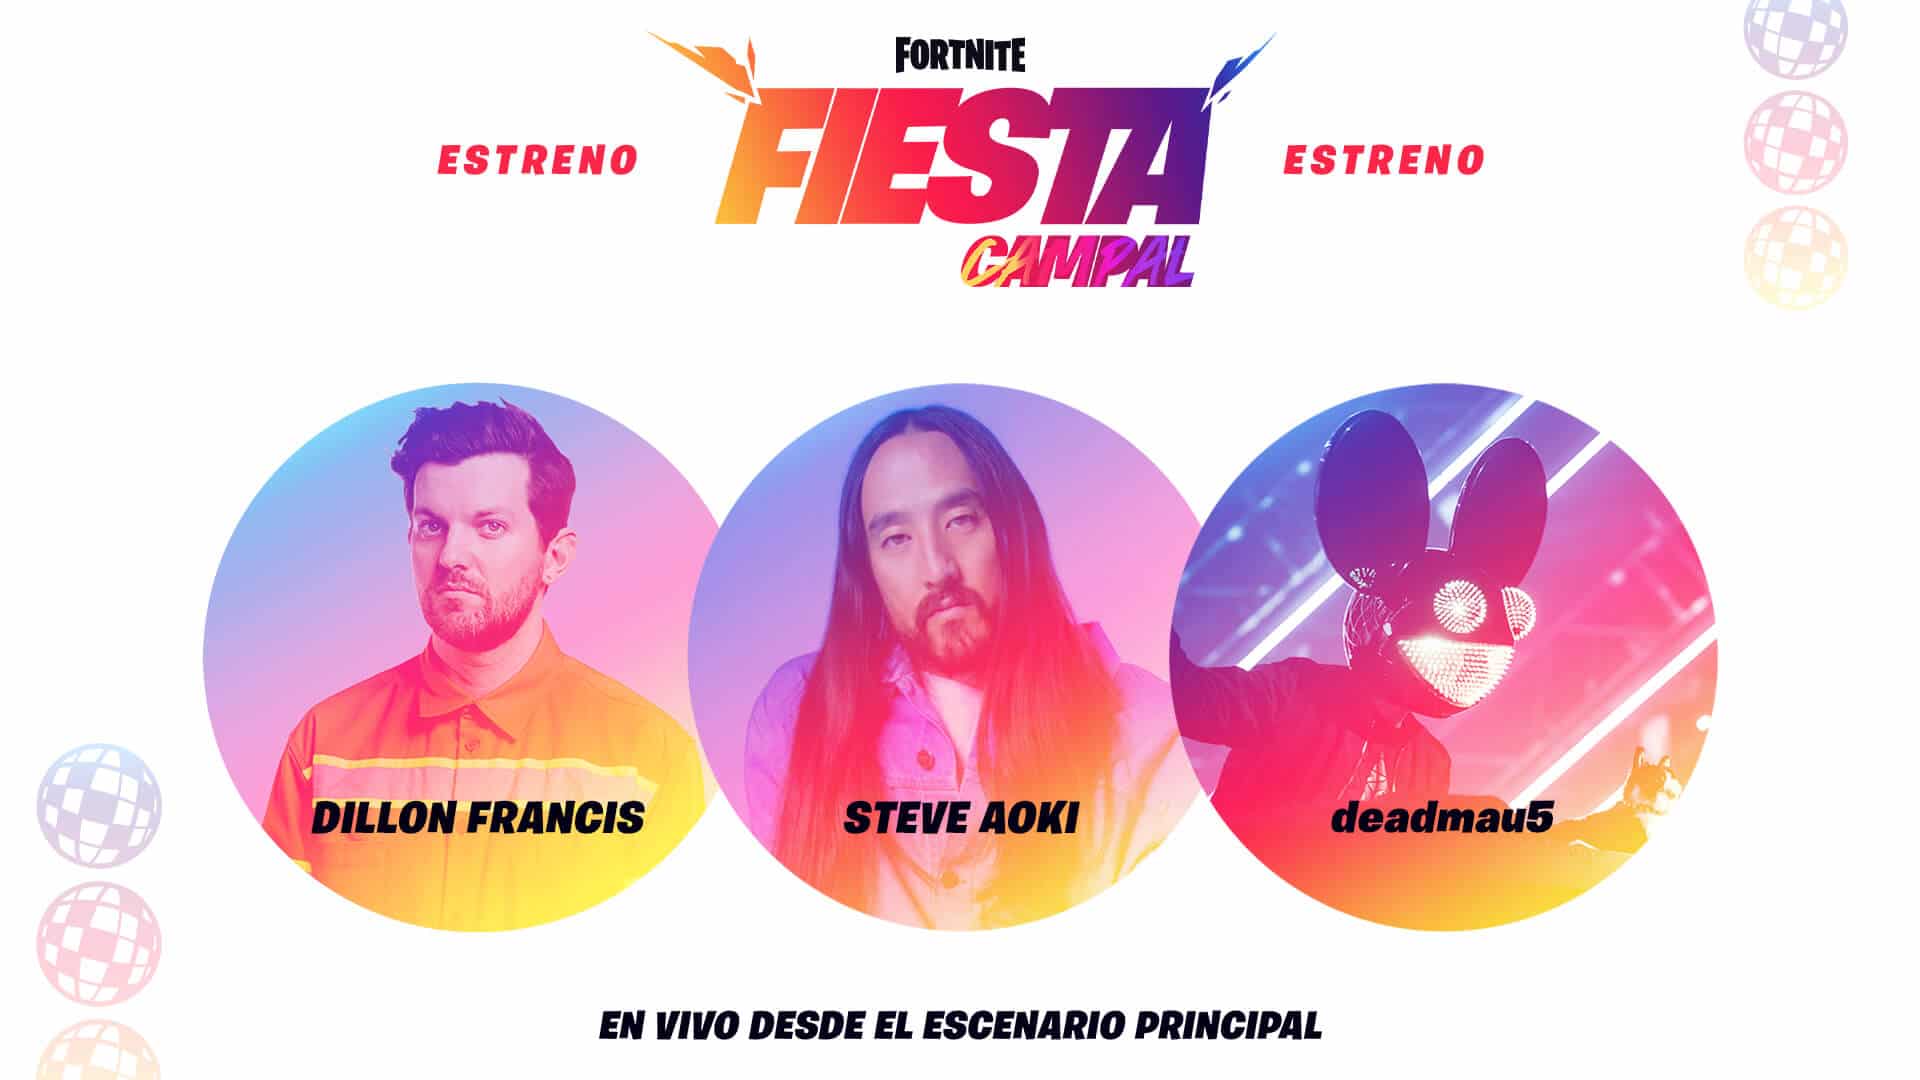 Fortnite,Dillon Francis, Steve Aoki ,deadmau5, Fiesta Campal, GamersRd